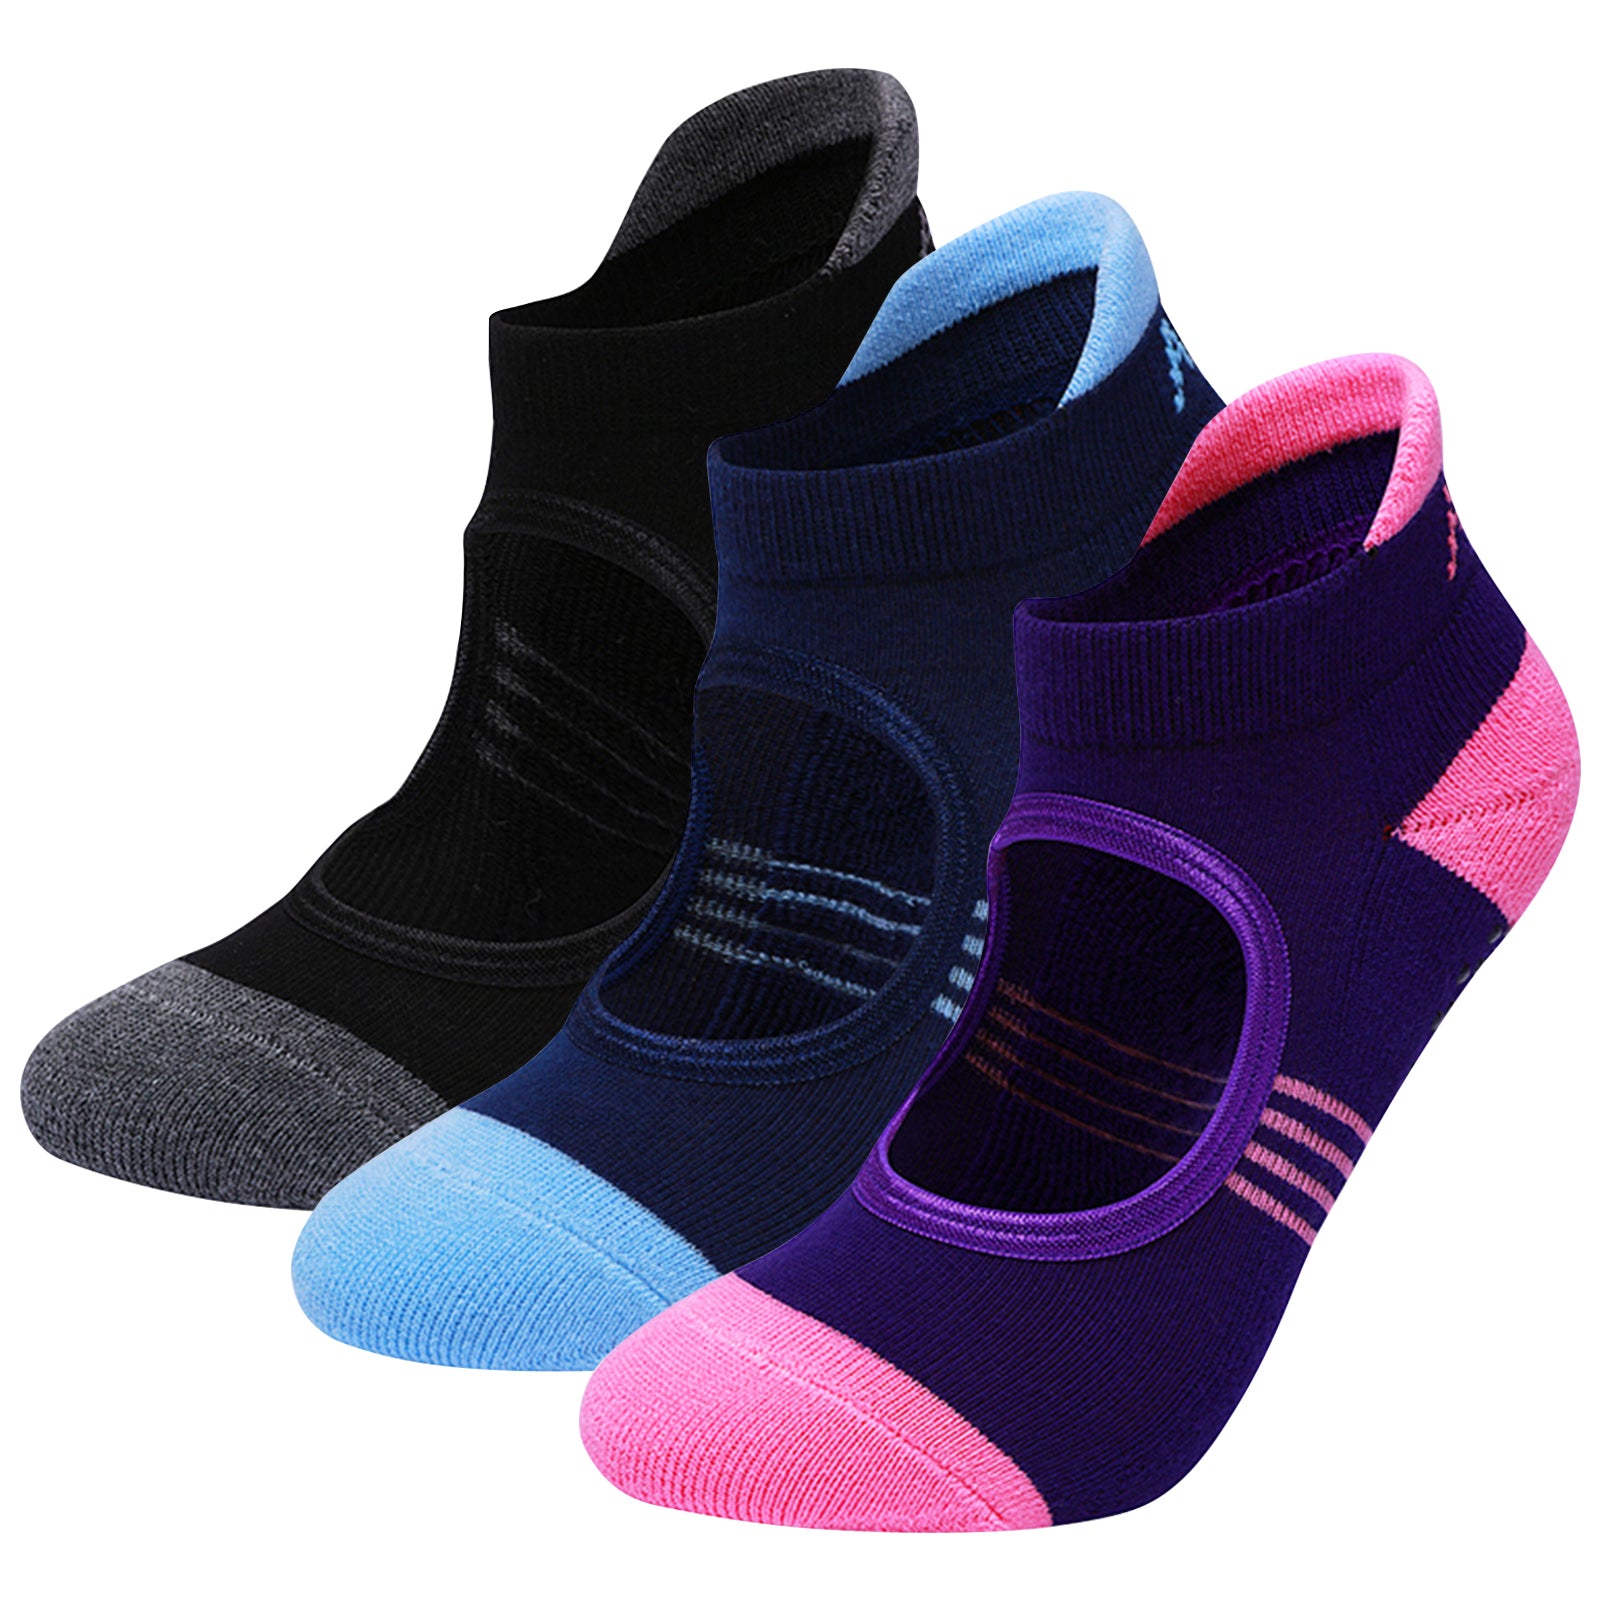 Artfasion's Women's Yoga Socks- Find your balance and comfort